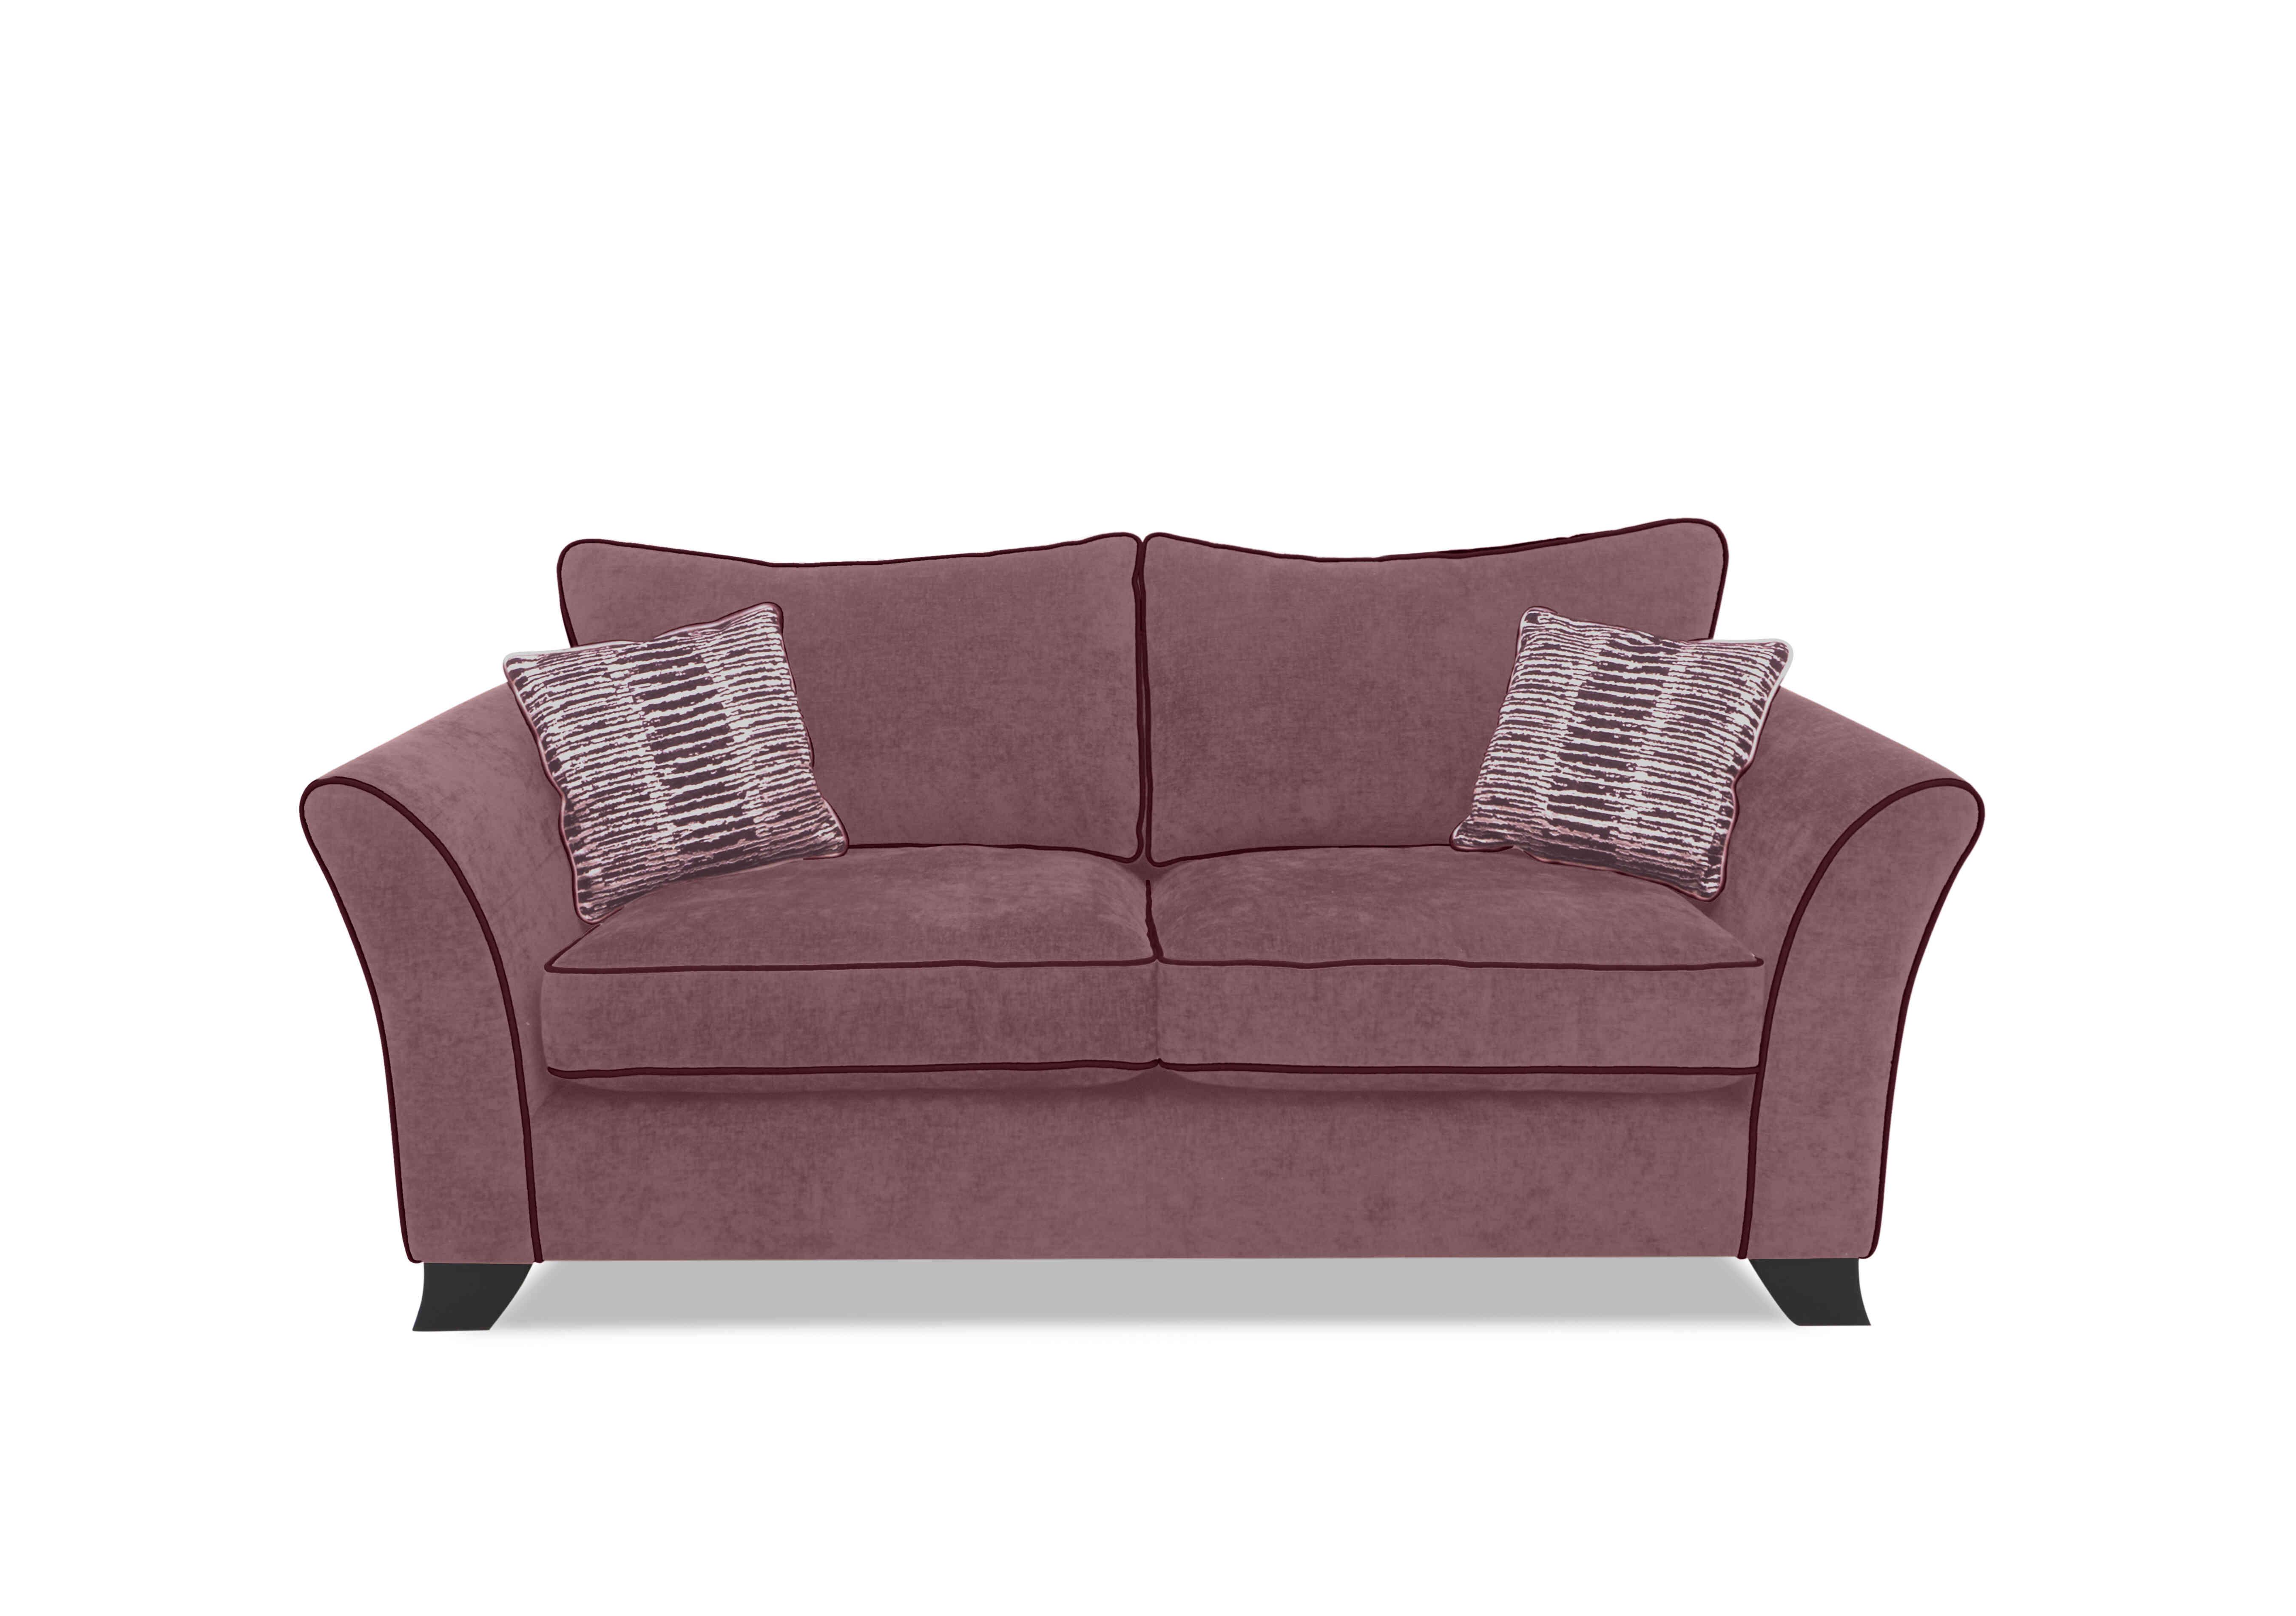 Stellar 3 Seater Classic Back Sofa in Bolero Mulberry Contrast on Furniture Village